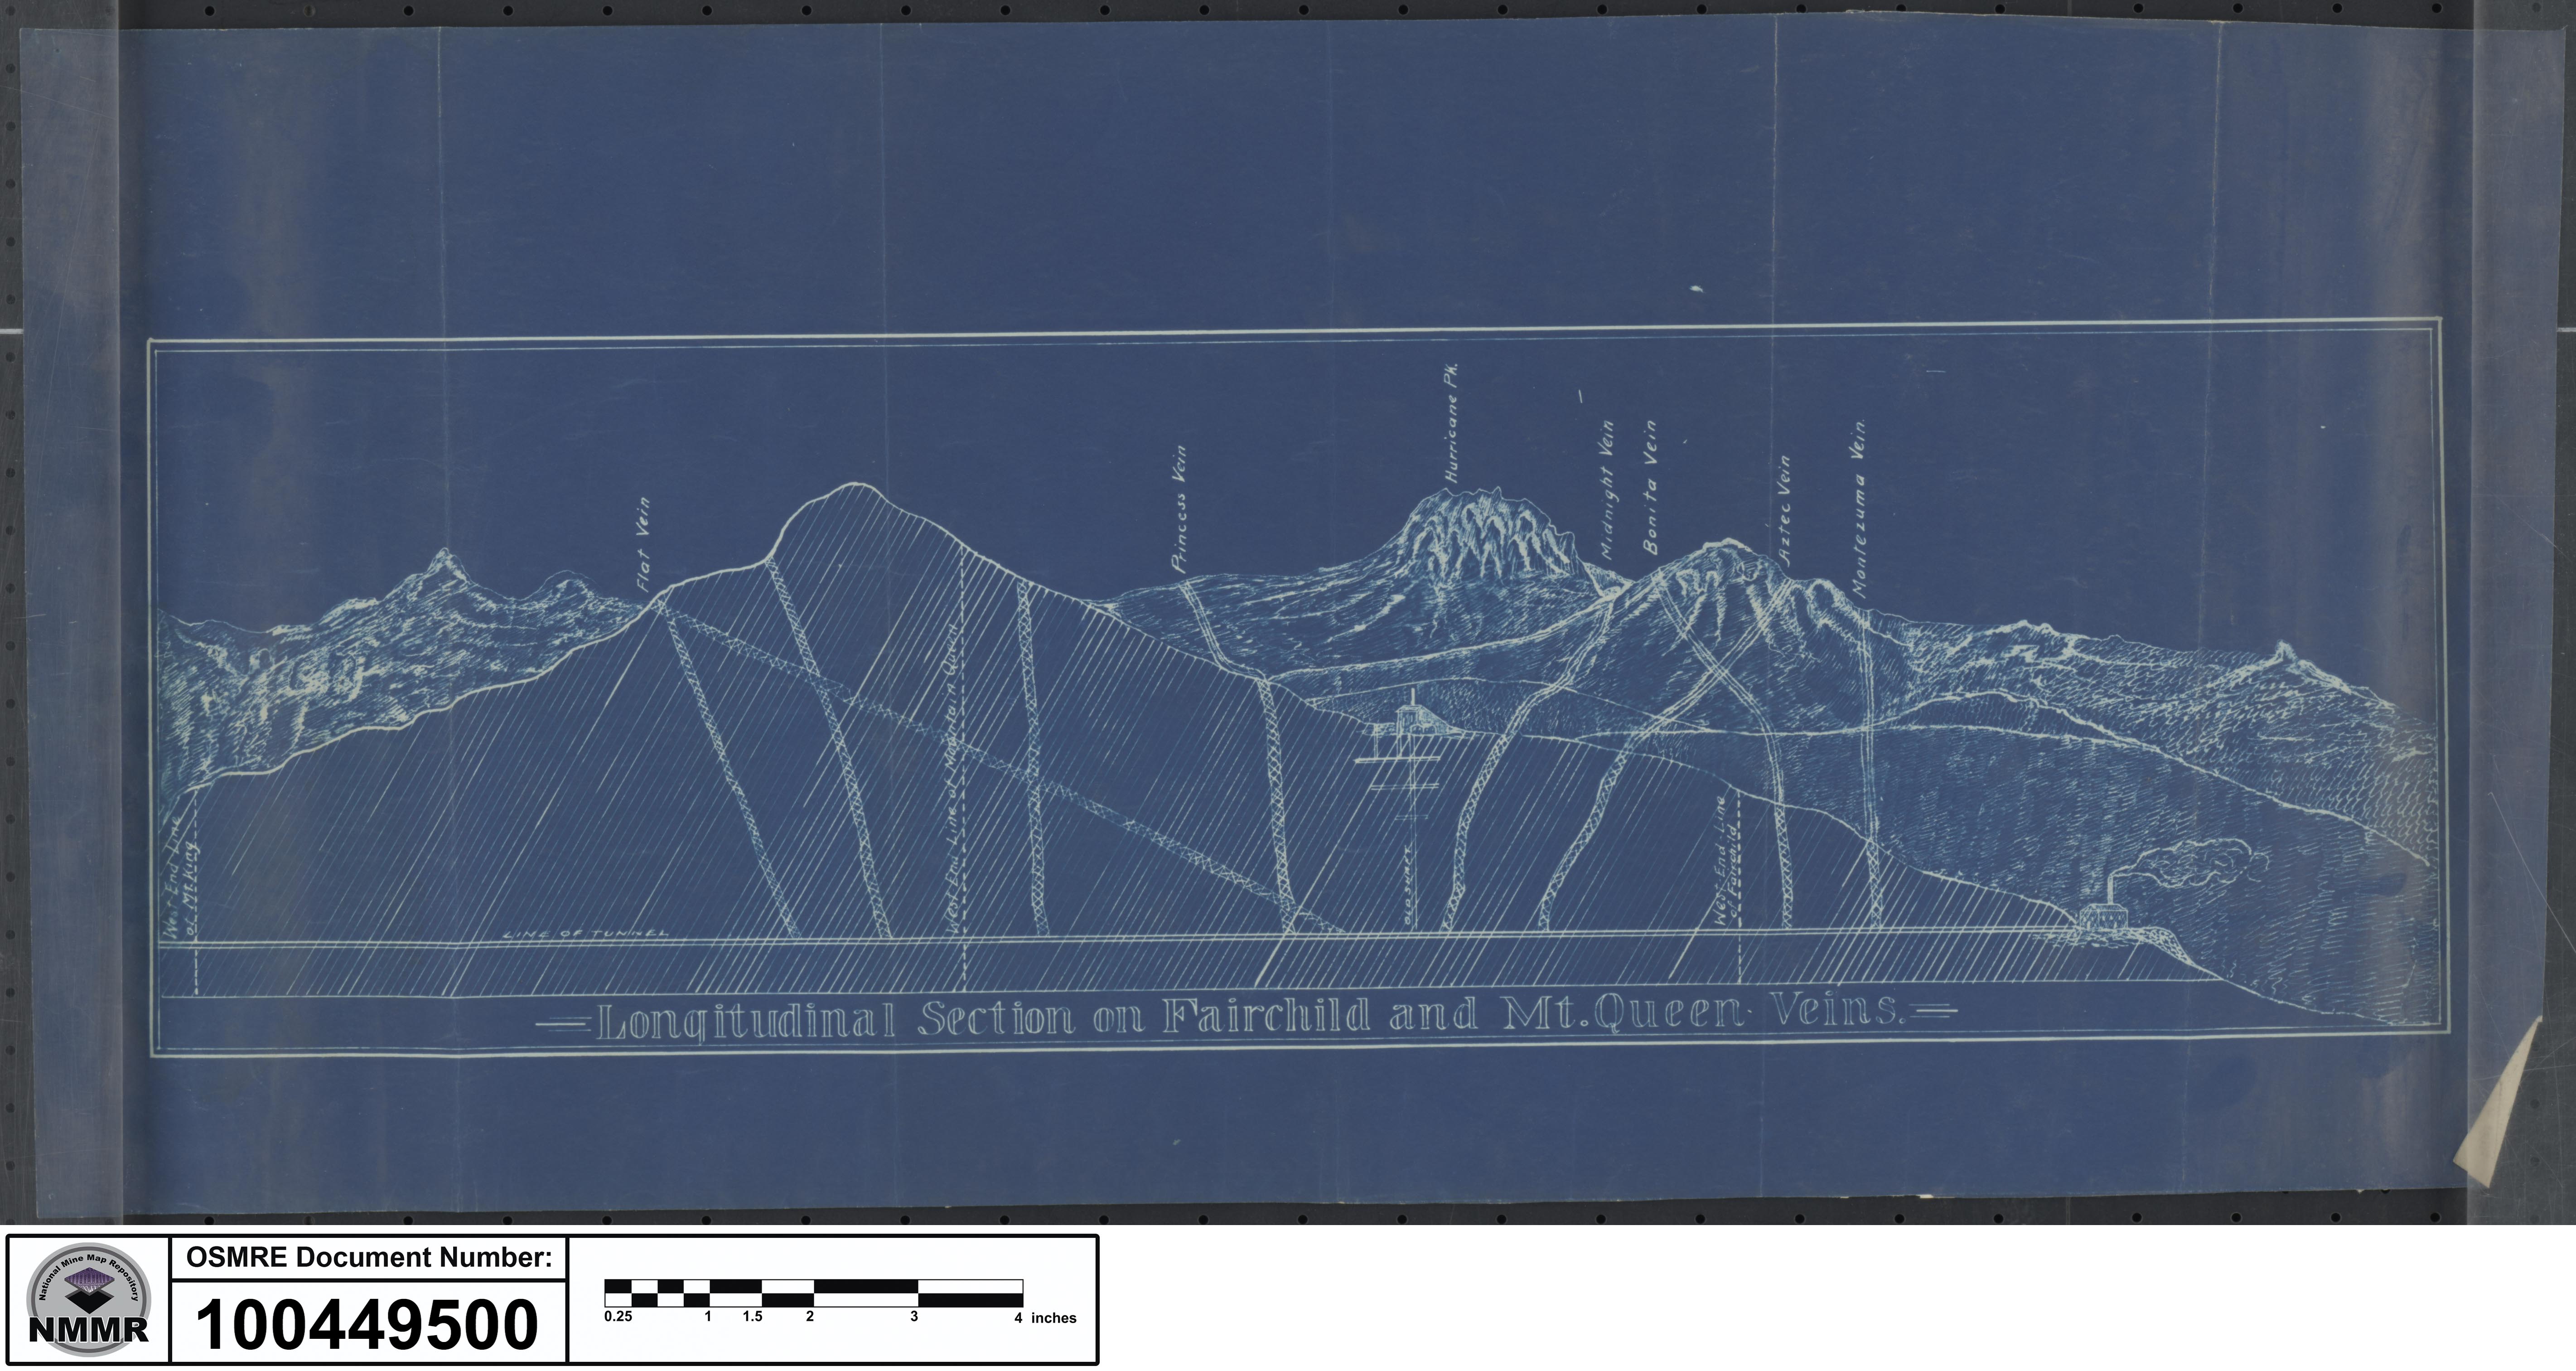 Longitudinal cross-section of mountains in blueprint